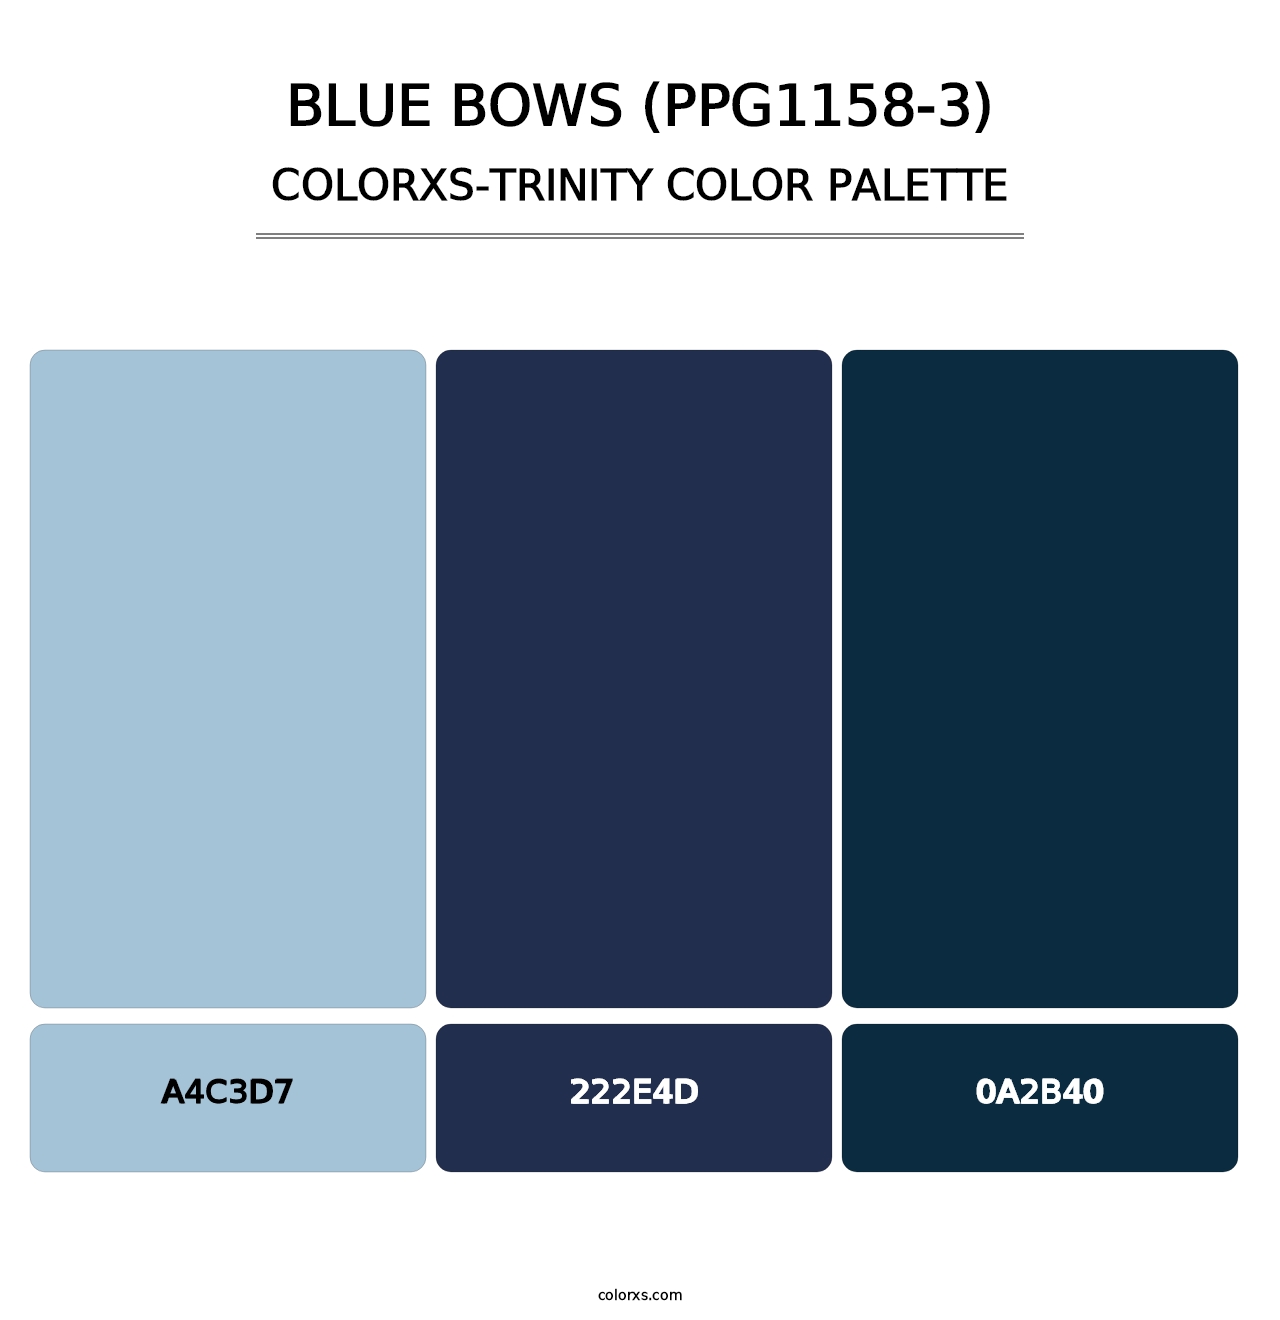 Blue Bows (PPG1158-3) - Colorxs Trinity Palette